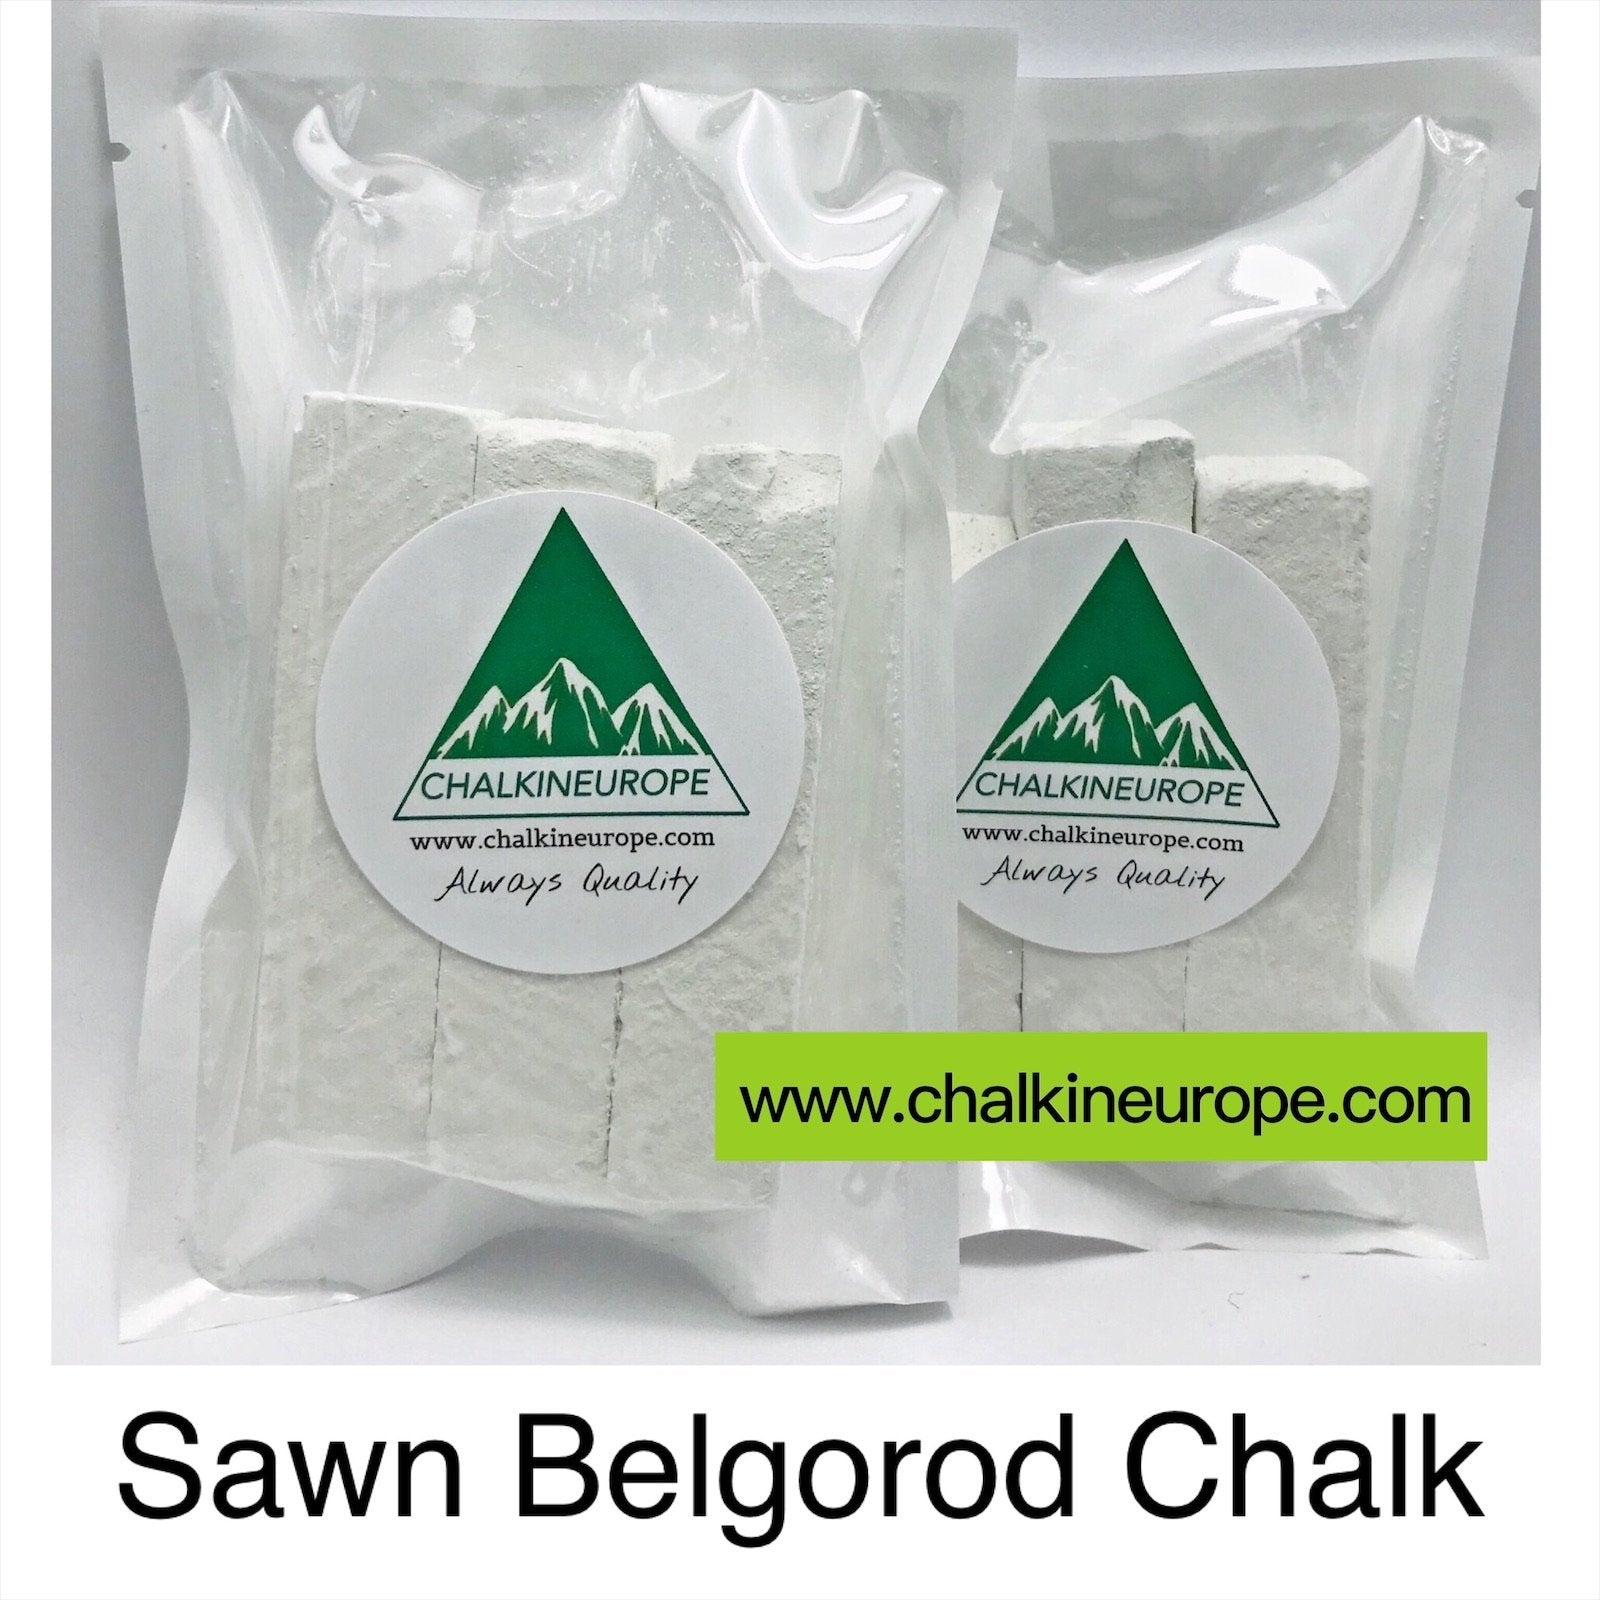 Sawn Belgorod Chalk - Chalkineurope